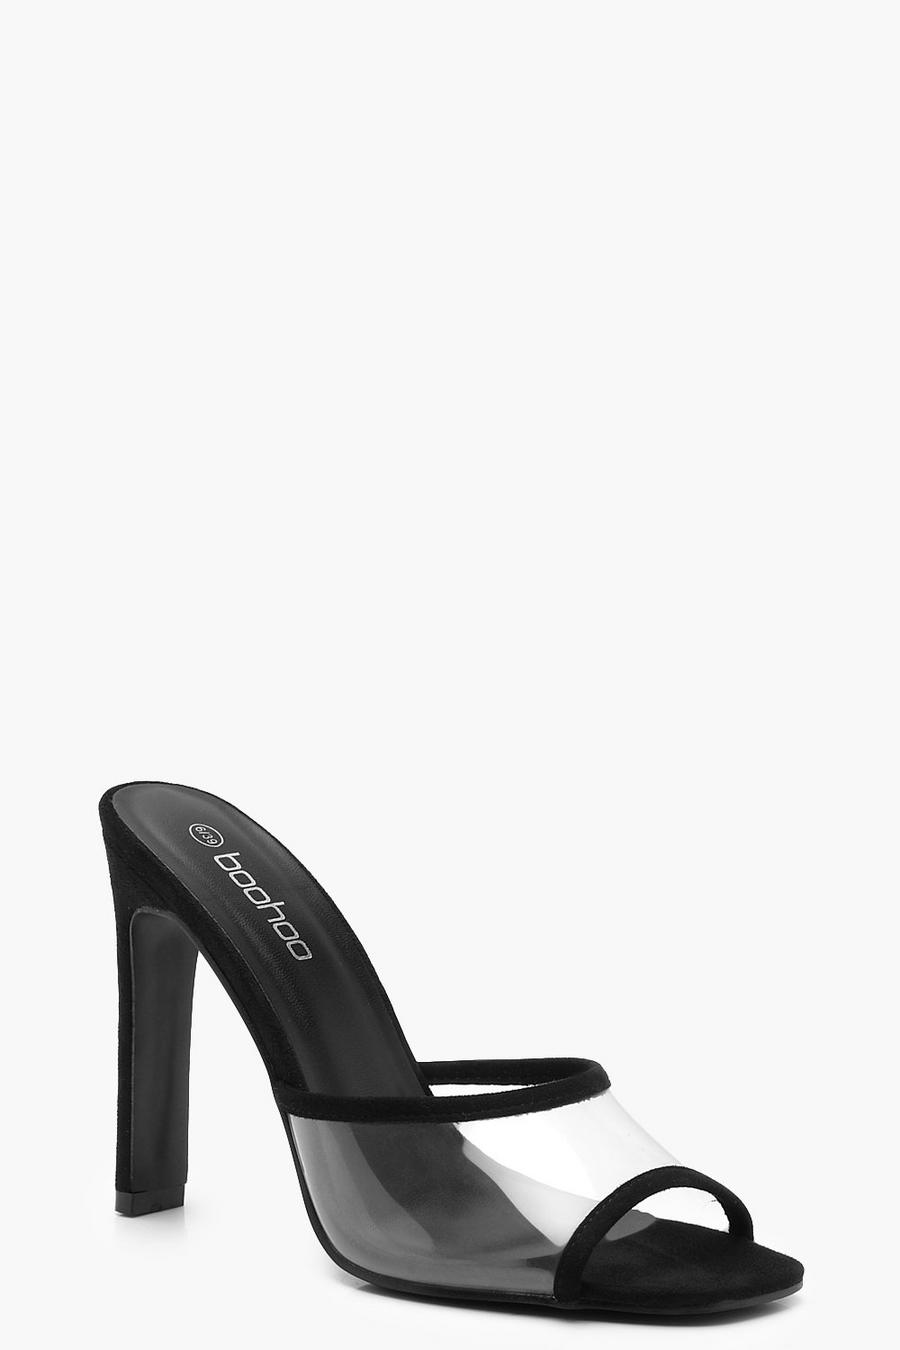 Simple Black Clear Strap High Heel Sandals